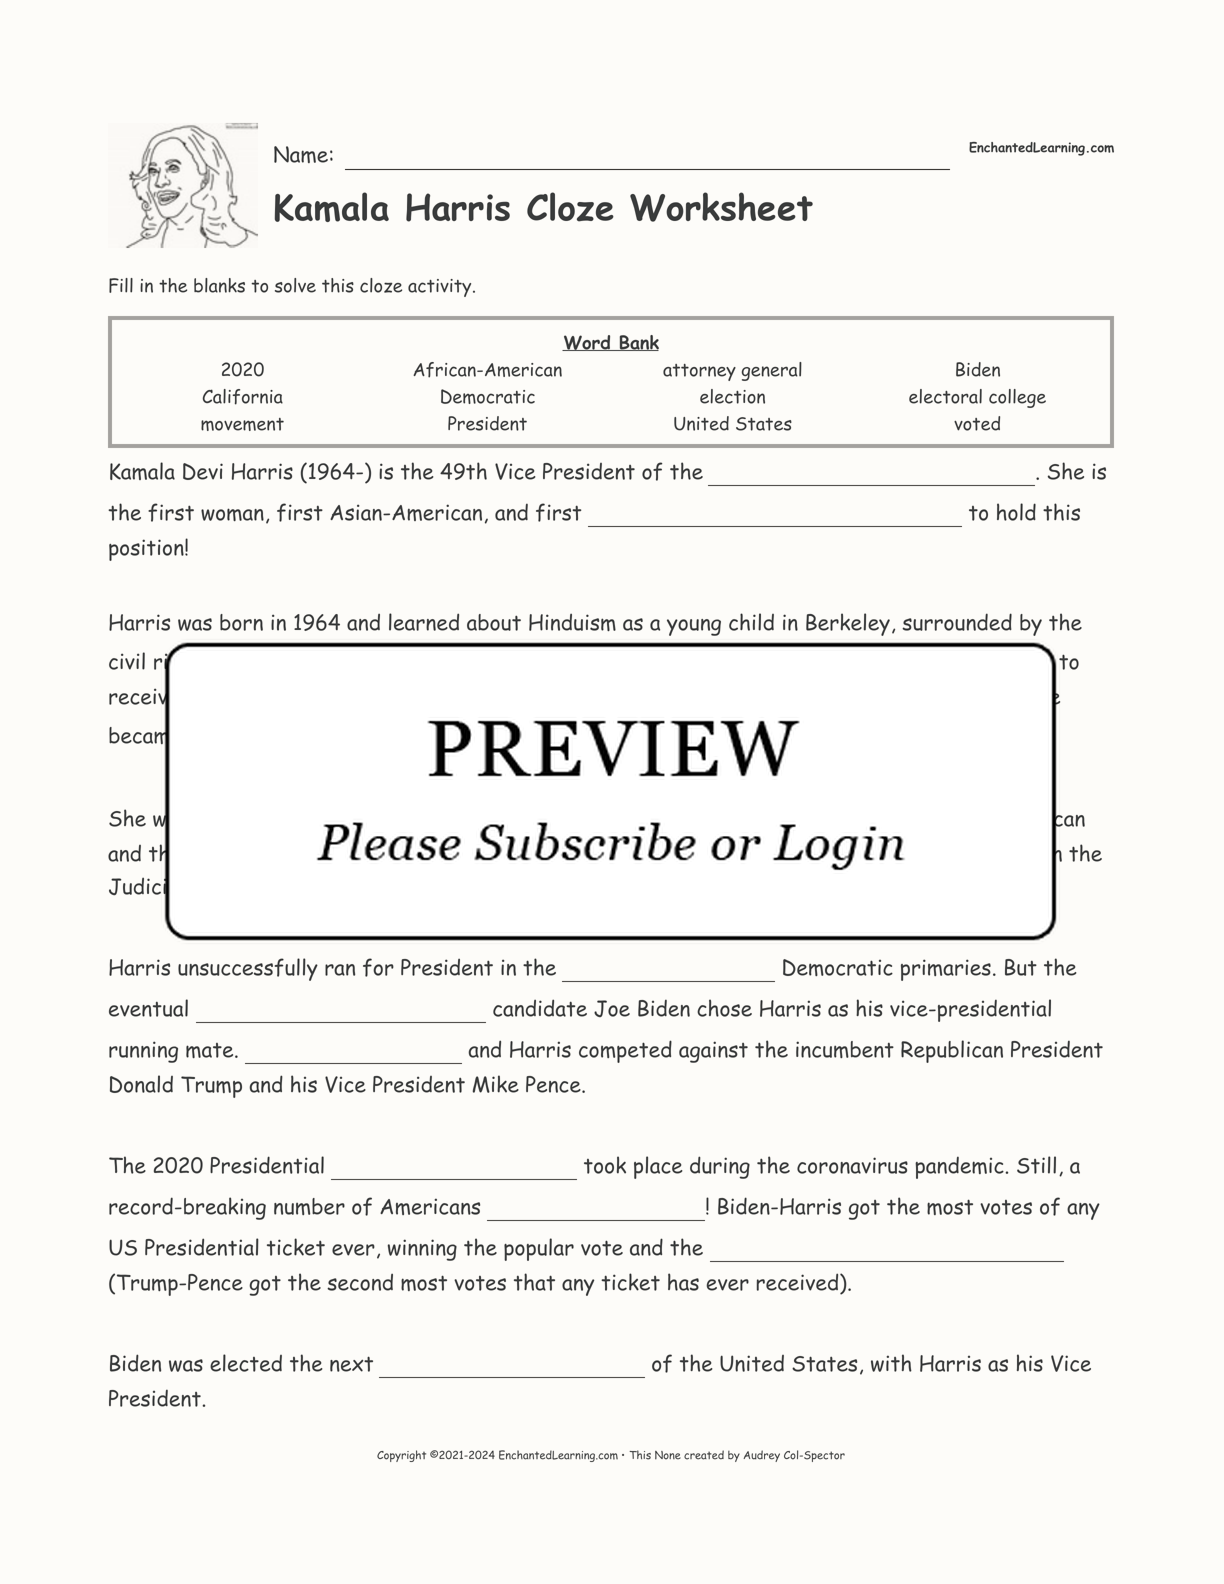 Kamala Harris Cloze Worksheet interactive worksheet page 1